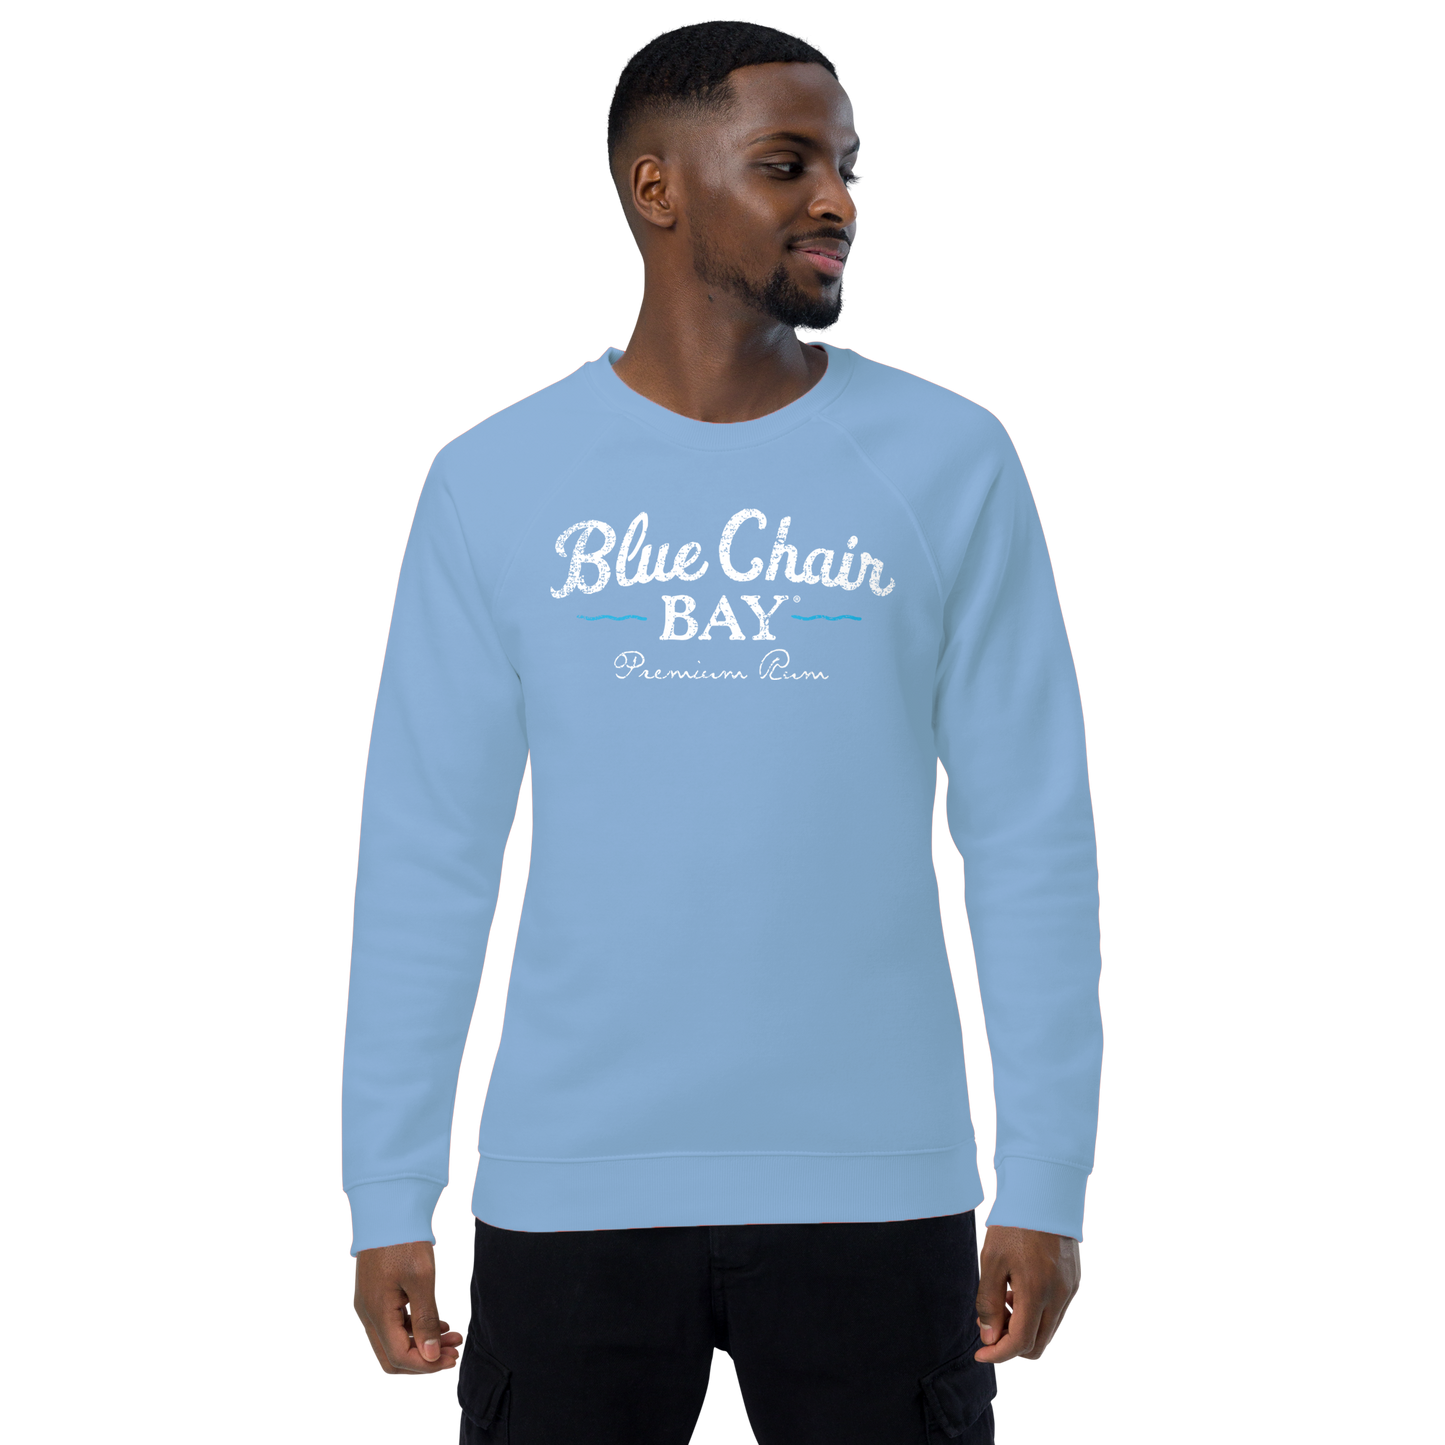 Crewneck Sweatshirt - Light Blue